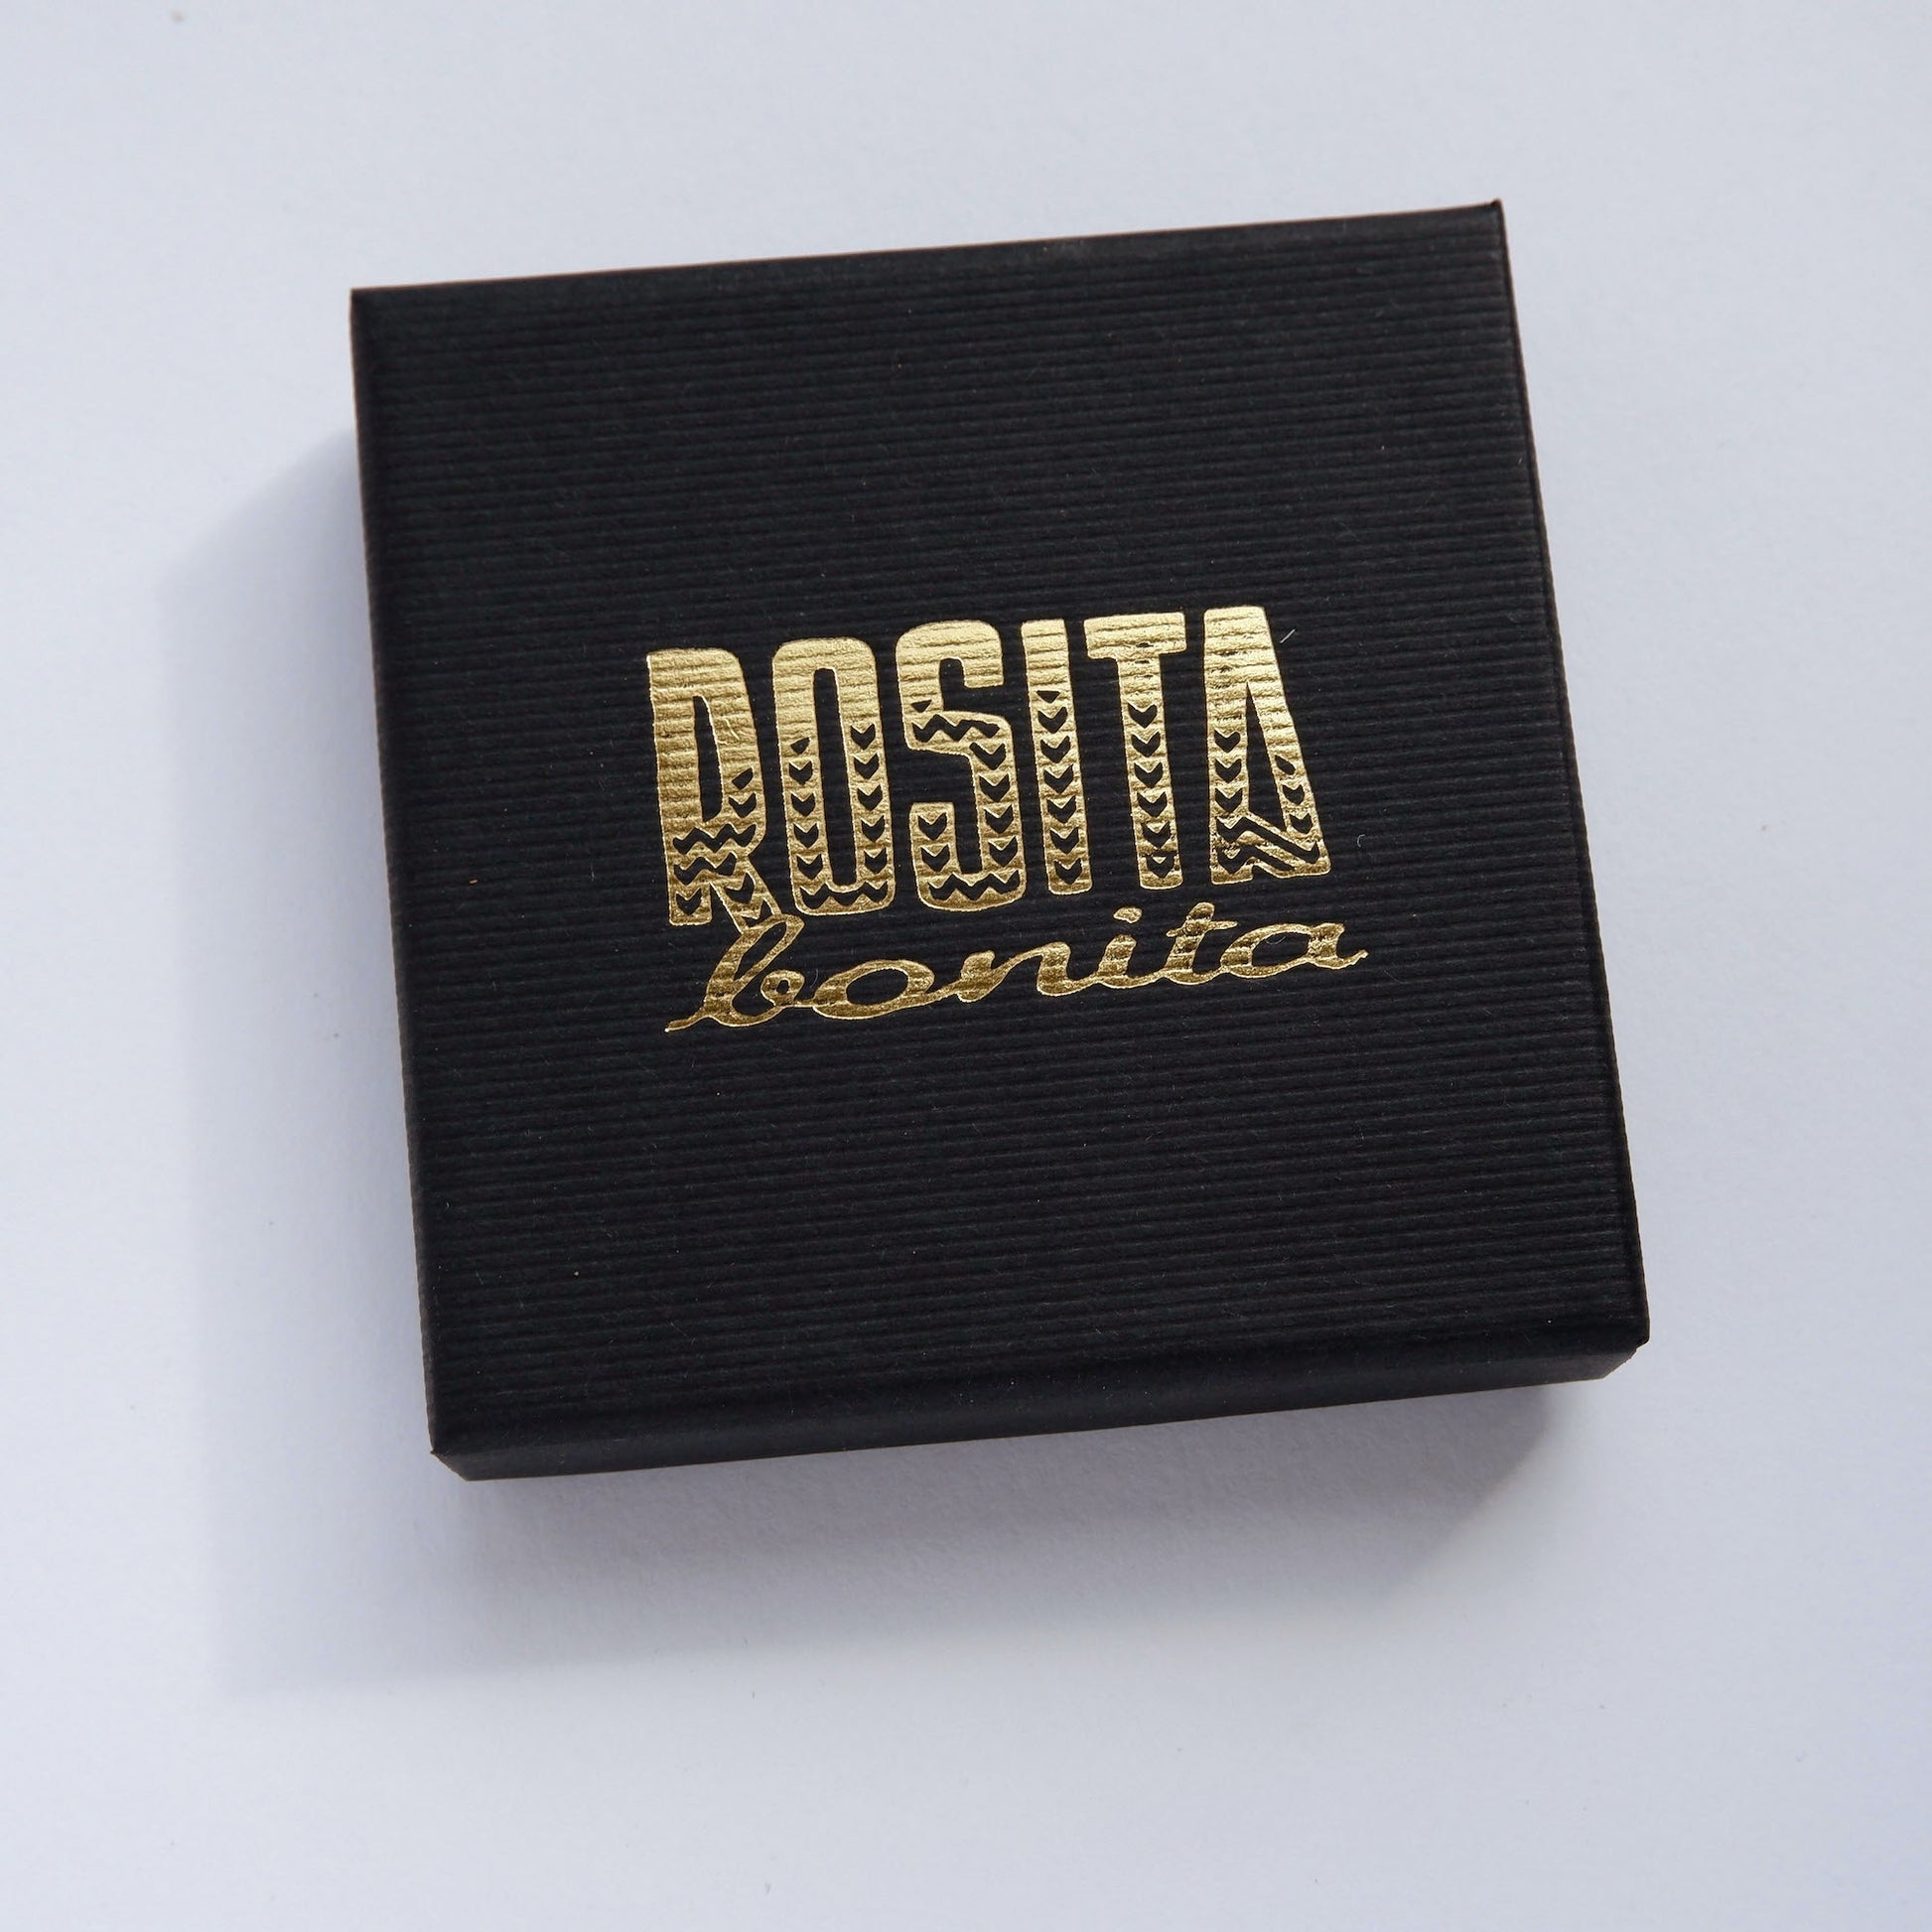 Black pinstripe cardboard jewellery box with rosita bonita logo in gold